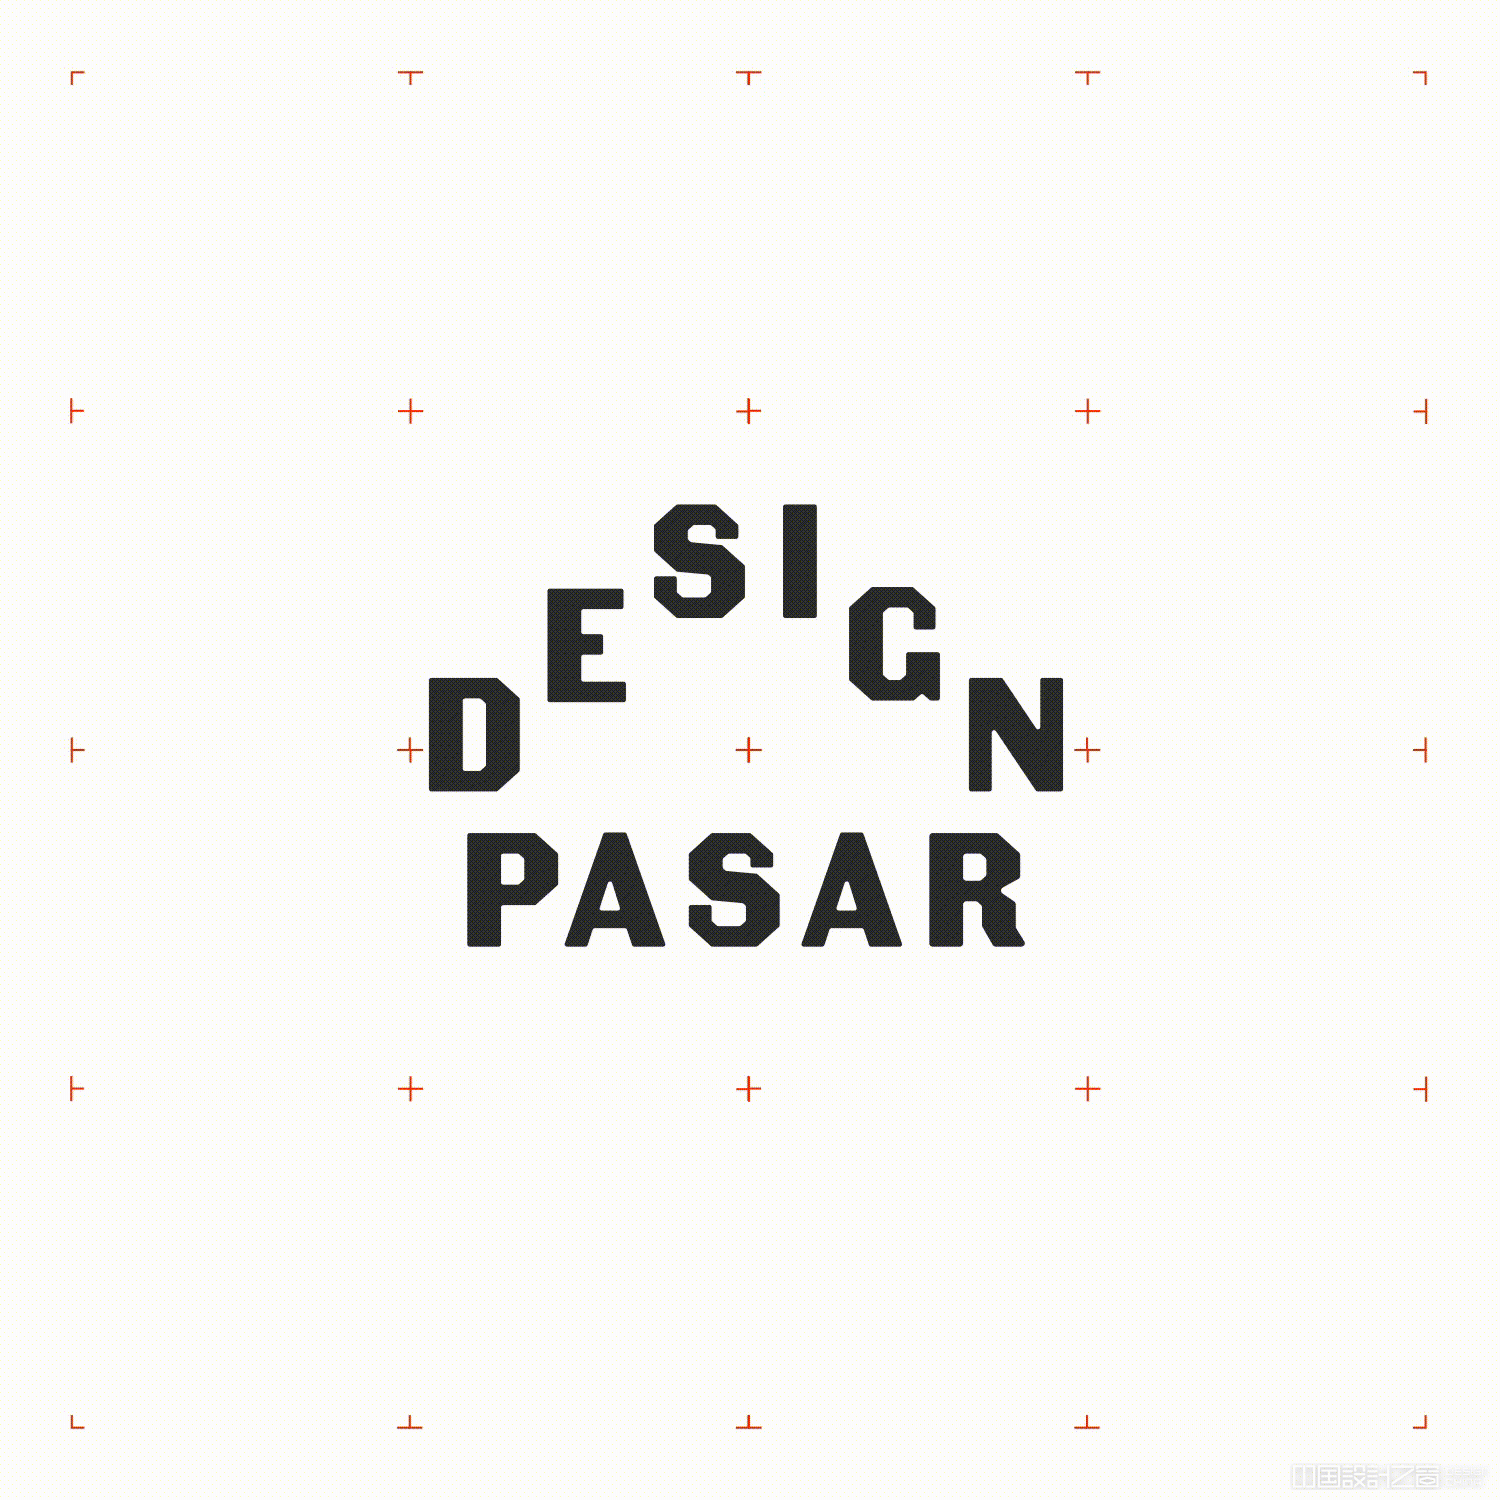 Design Pasar logo animation